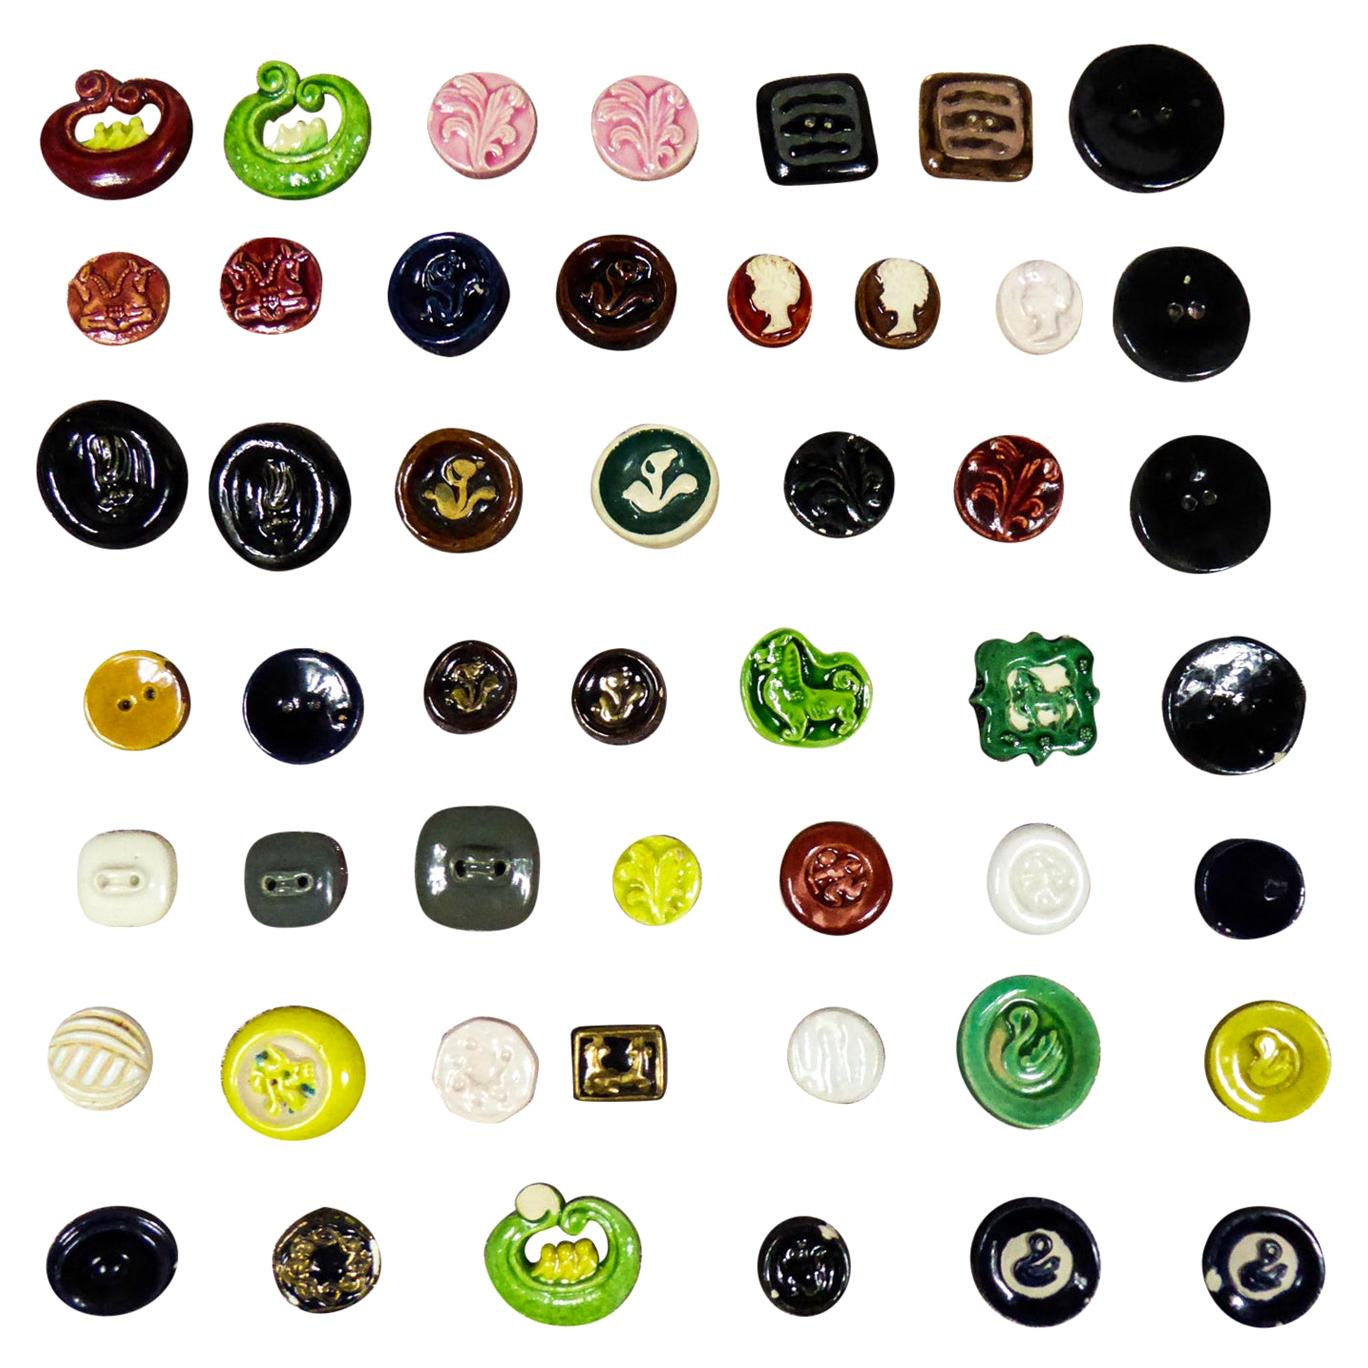 42 Ceramic Buttons Possibly Jean Clément for Elsa Schiaparelli Circa 1930/1940